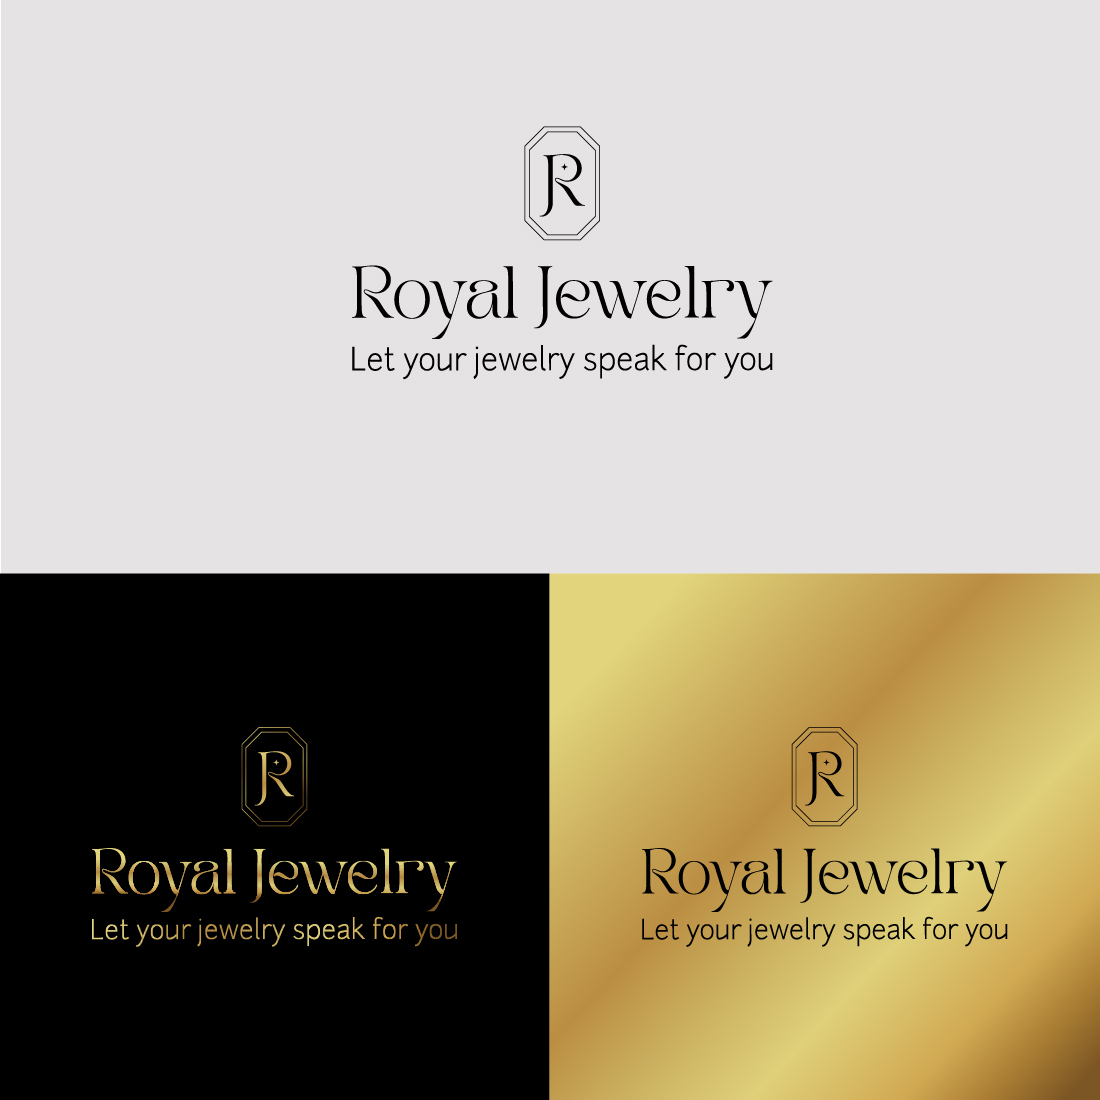 R logo, Jewelry logo, Royal Jewelry logo cover image.